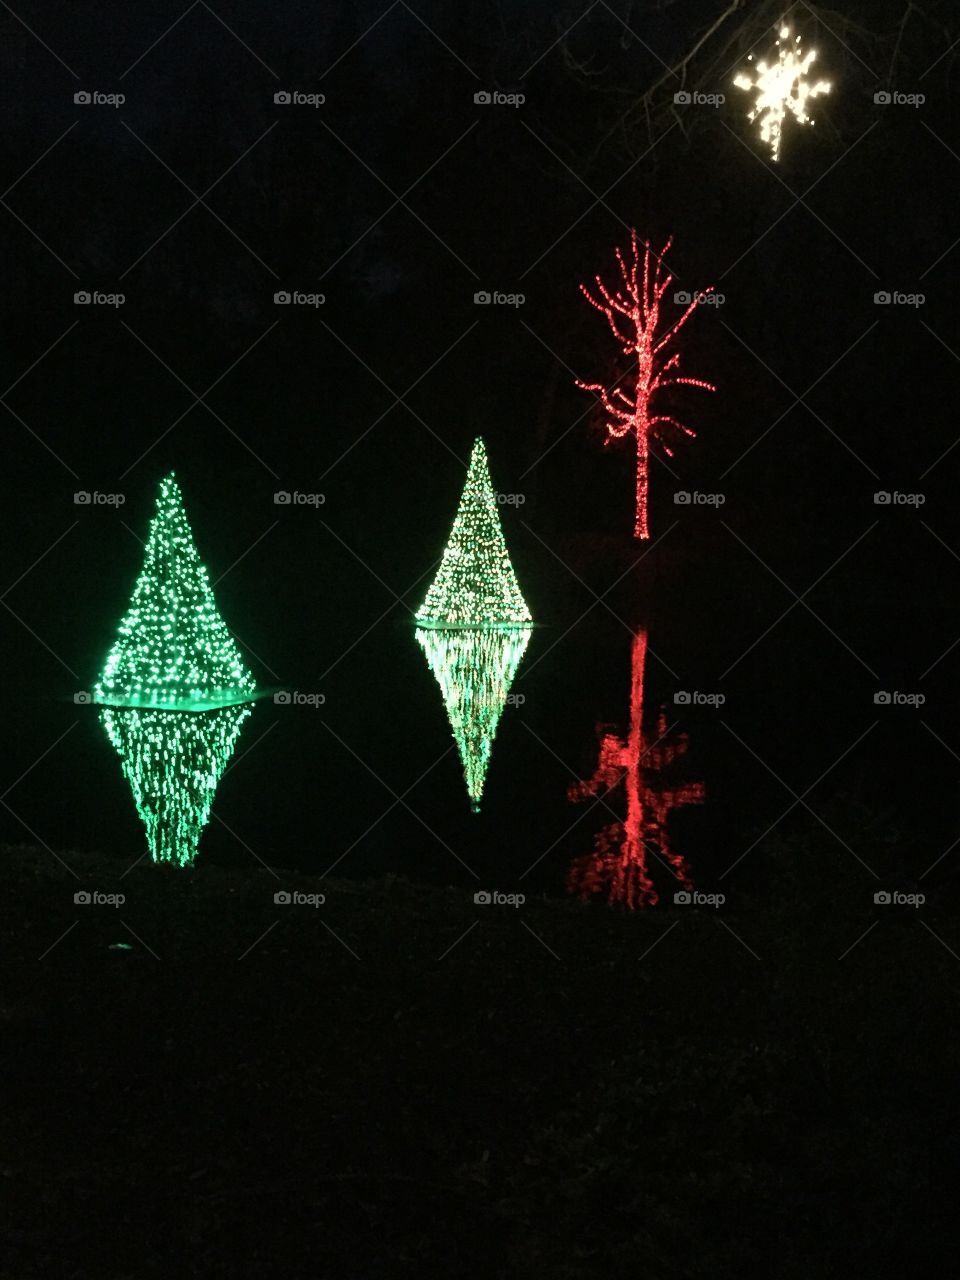 Festive lights. Longwood gardens winter display on the lake